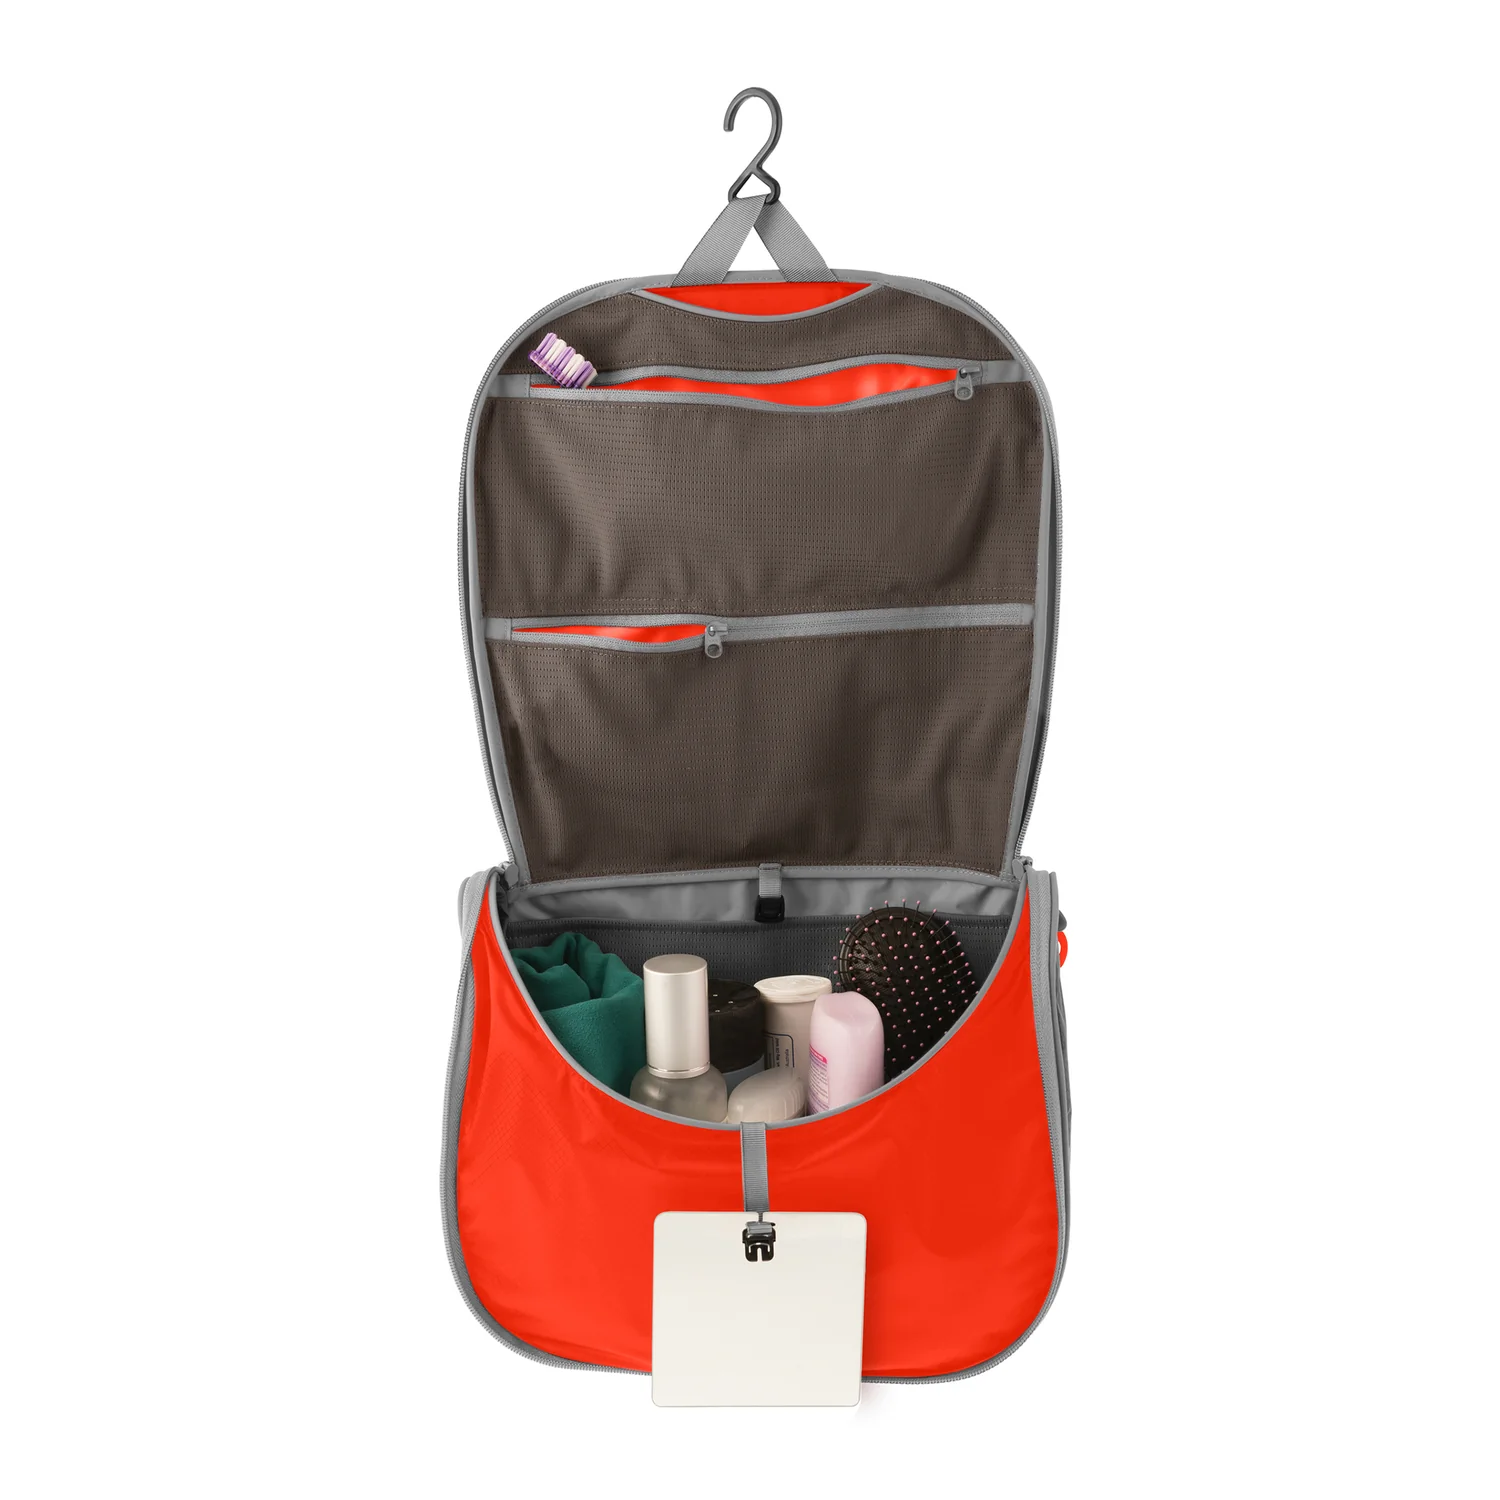 Maxchange Hanging Toiletry Bag | Compact Travel Toiletry Bag for Men/Women